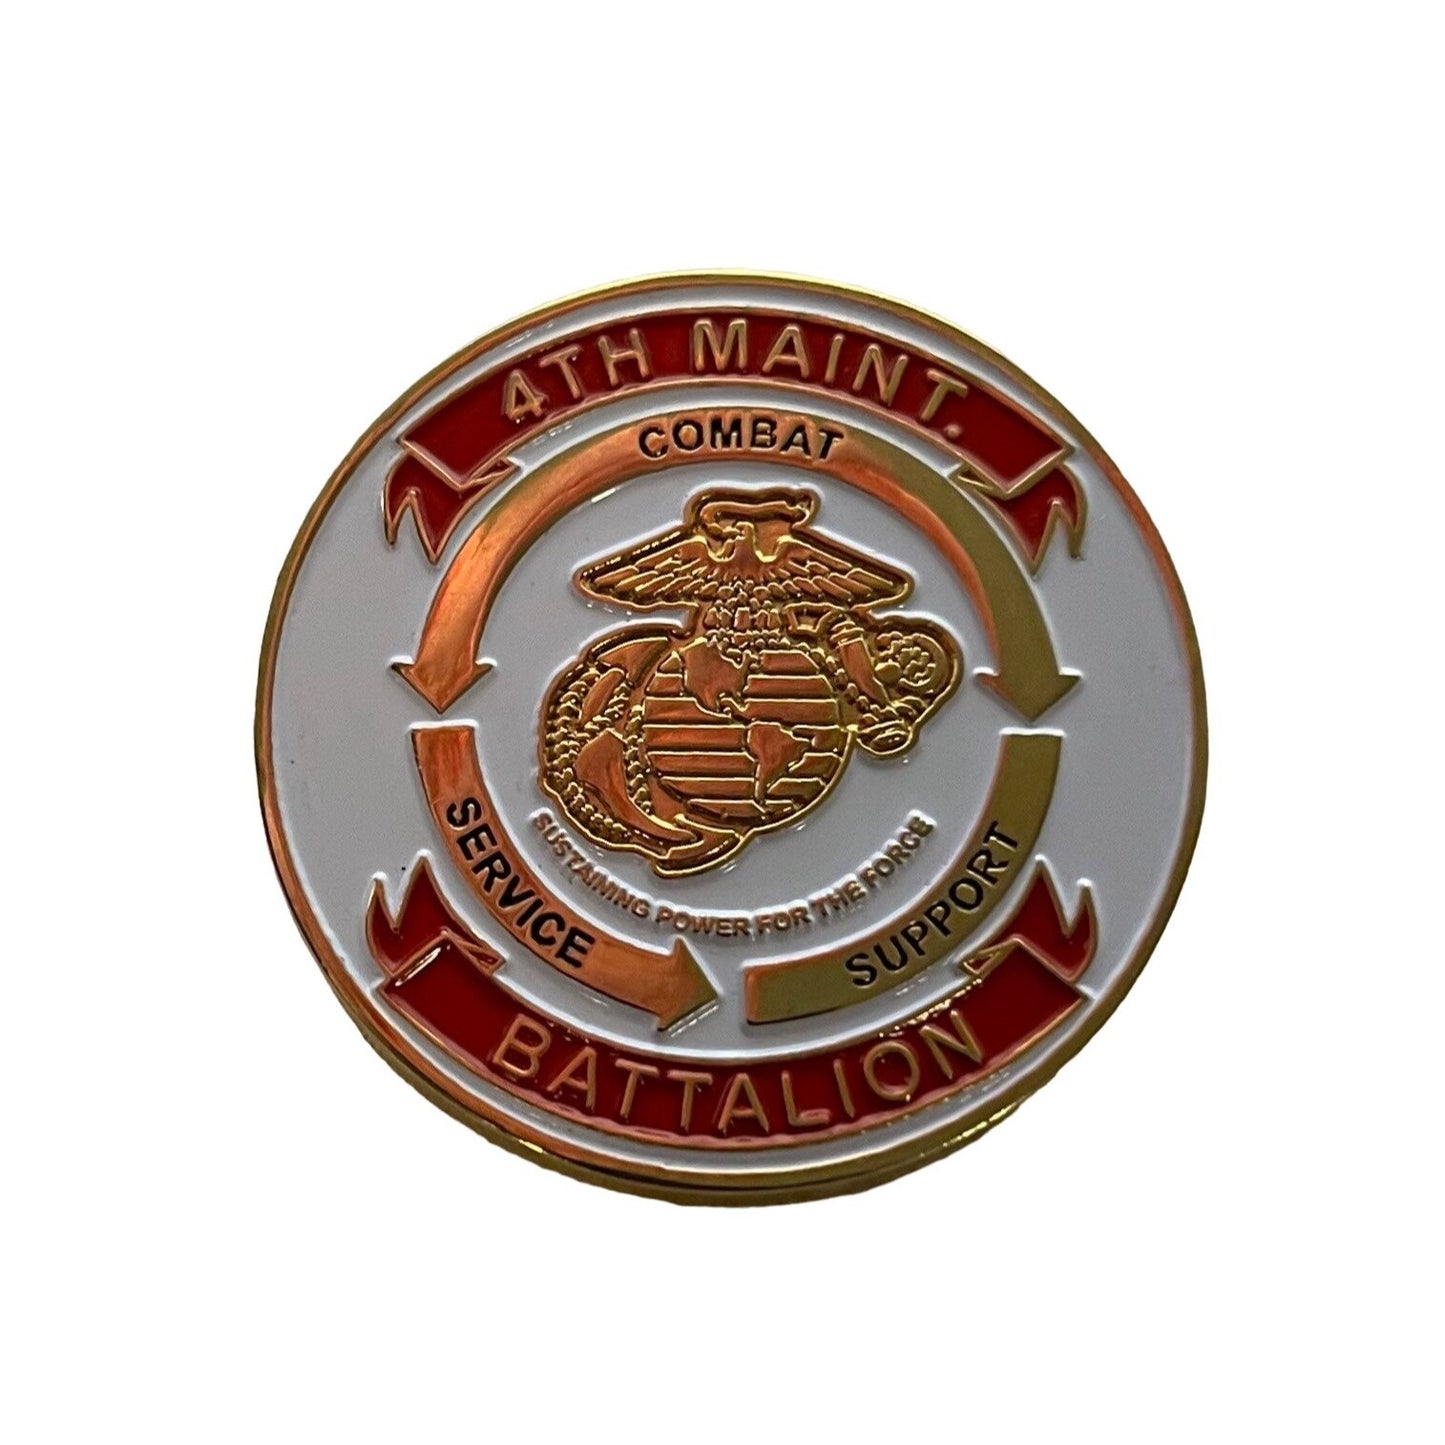 Lot of 4 US Marine Corps 4th Maintenance Battalion - Marine Corps Ball Challenge Coins